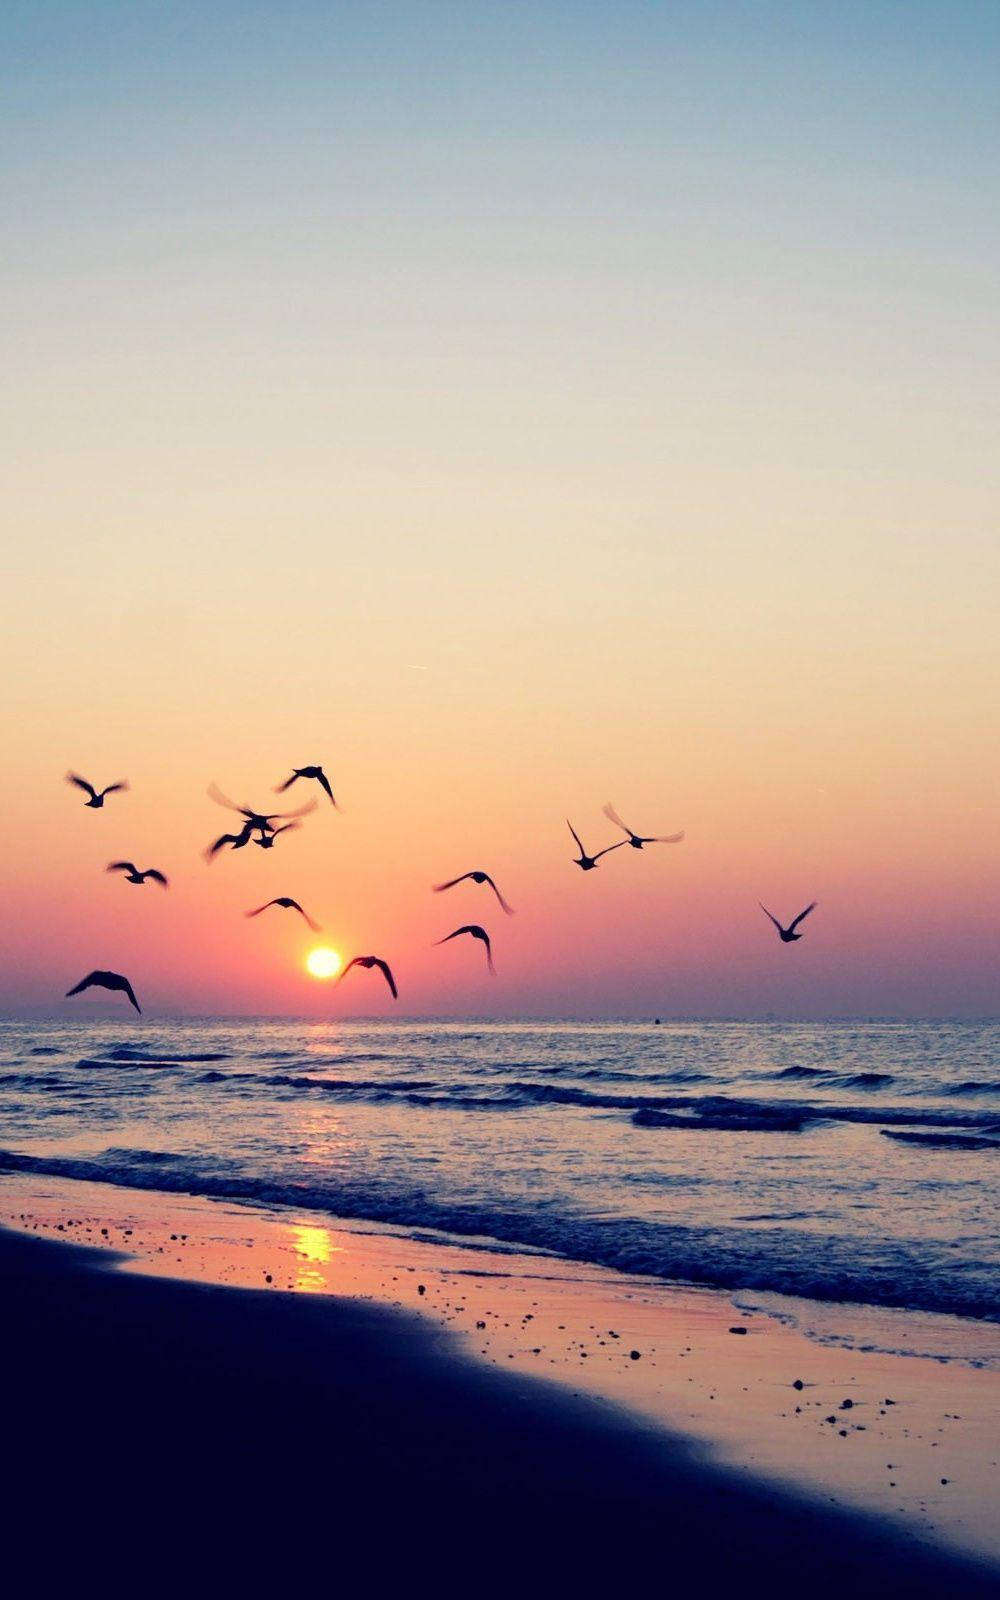 Flying Birds On Beach During Sunset Wallpaper